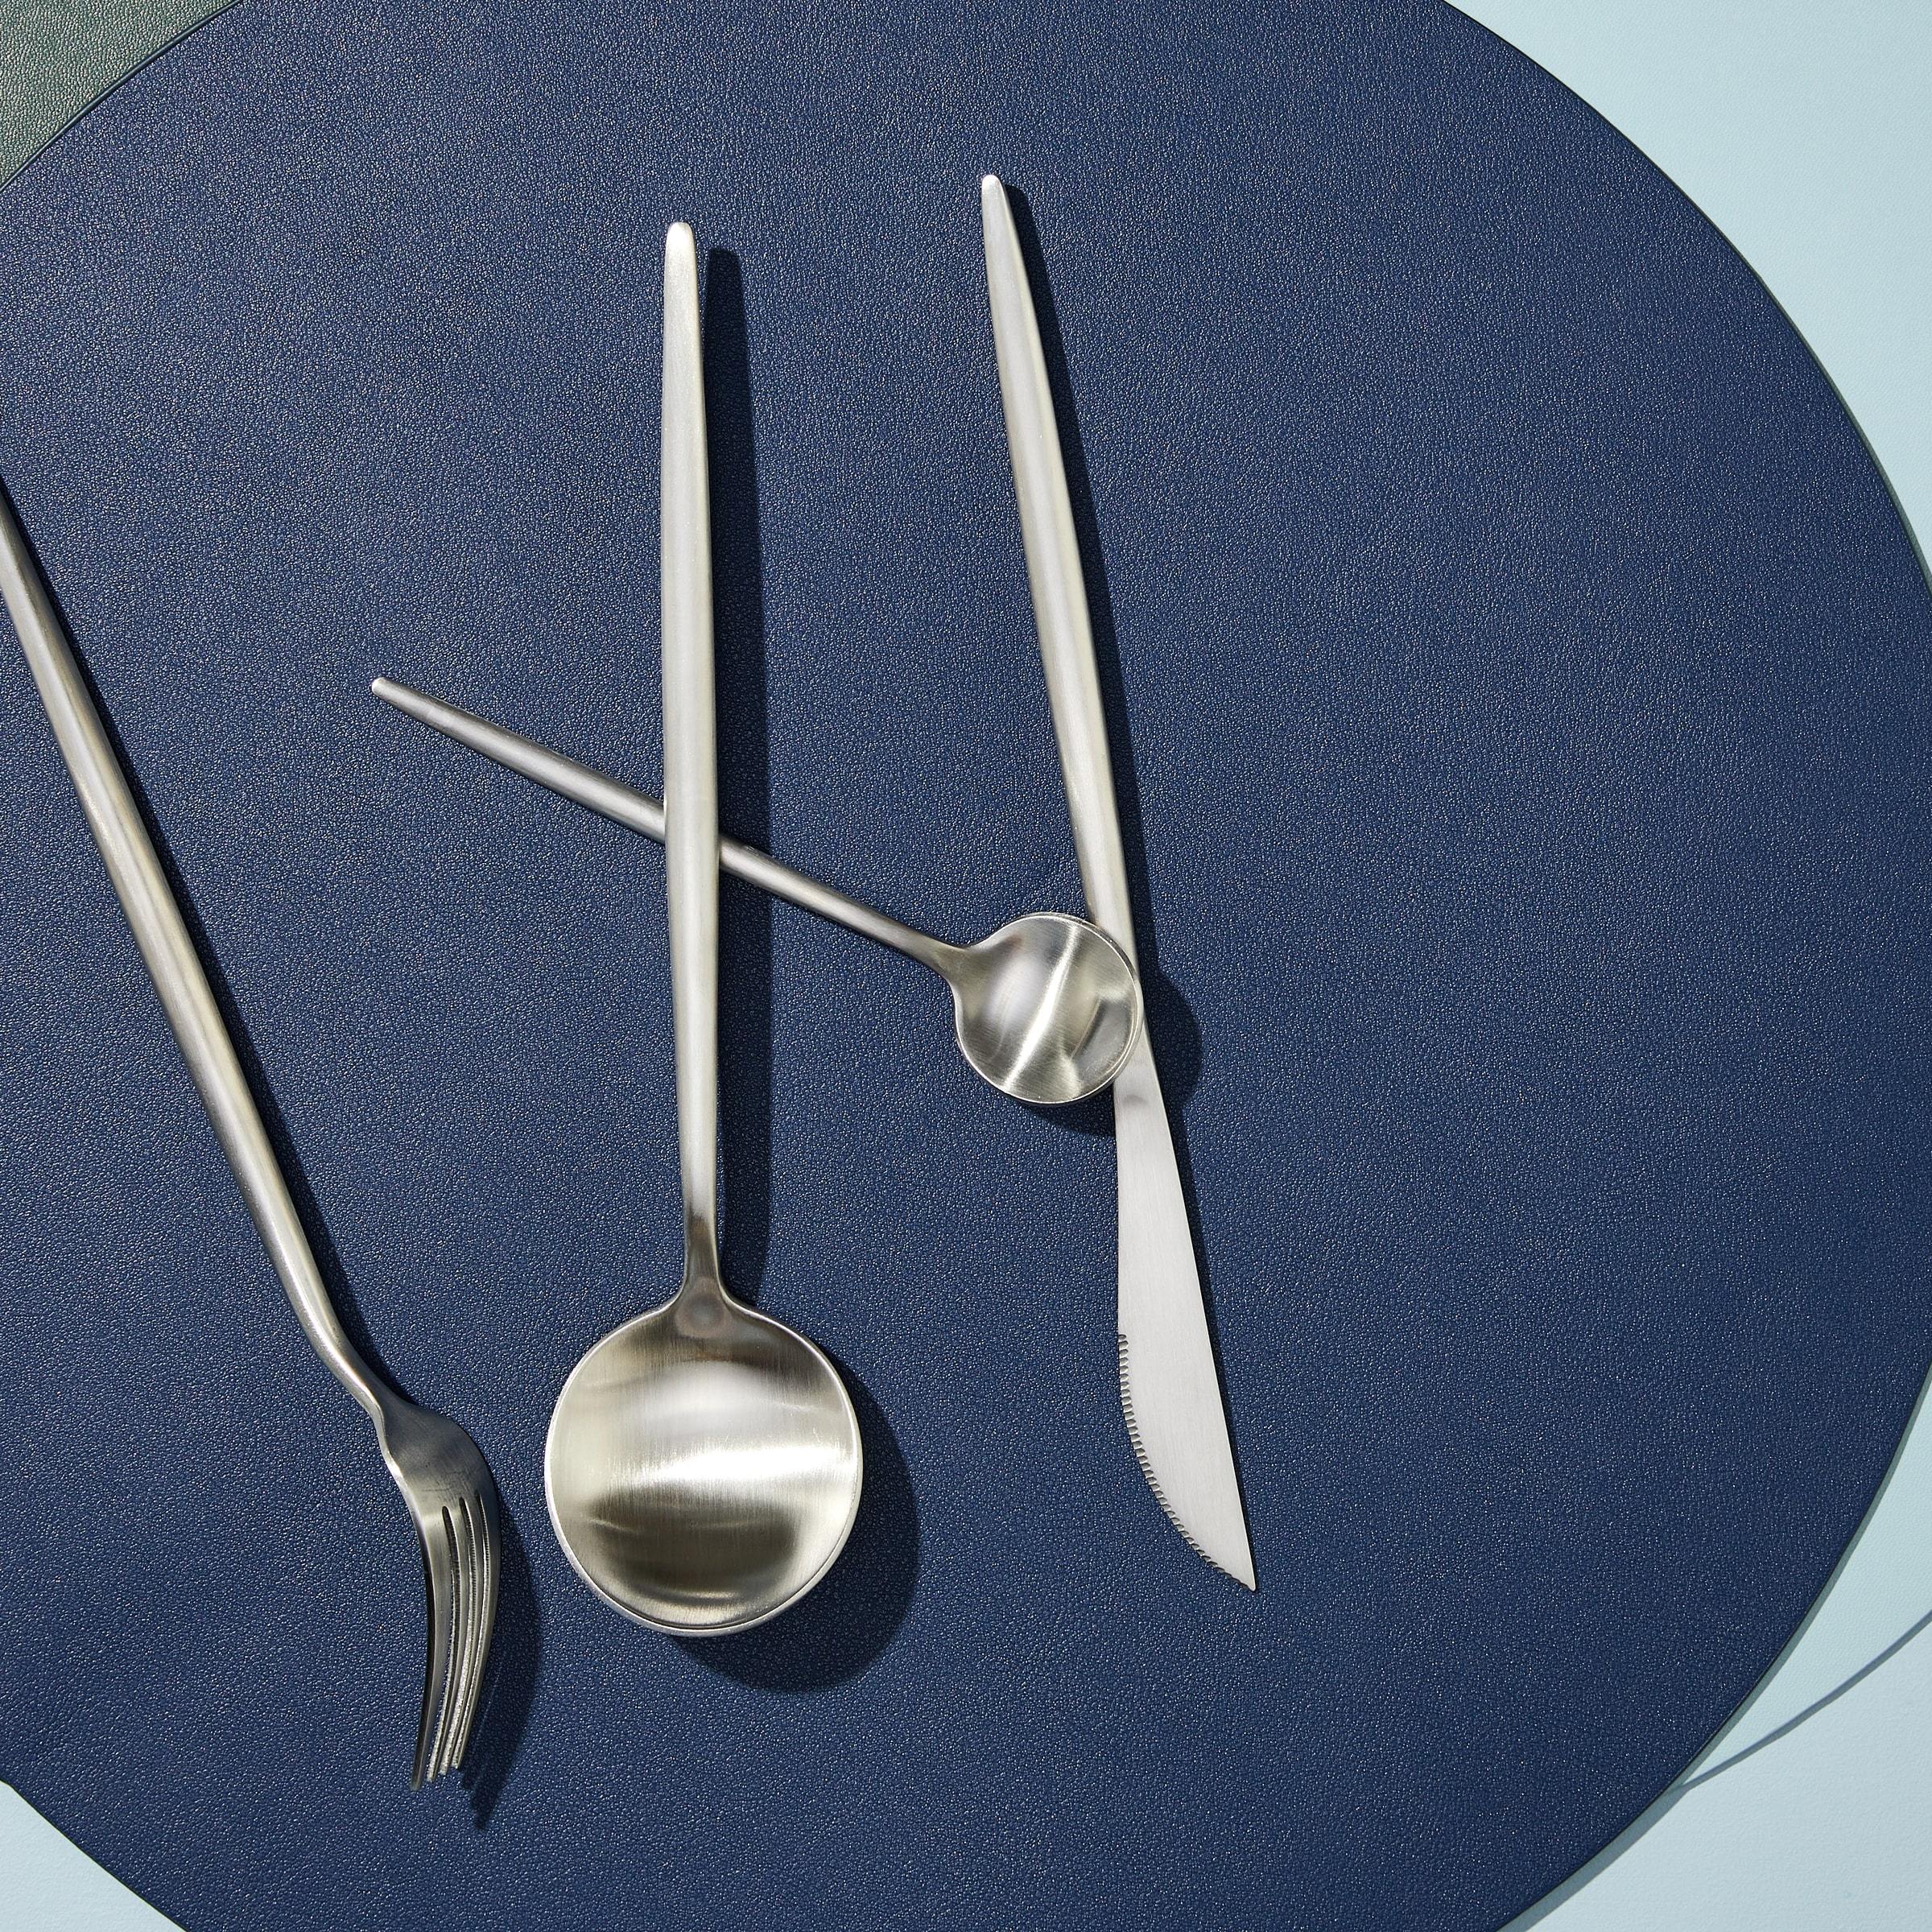 Peru Cutlery Set - Silver - Buy Flatware Sets Online at FRANKY'S